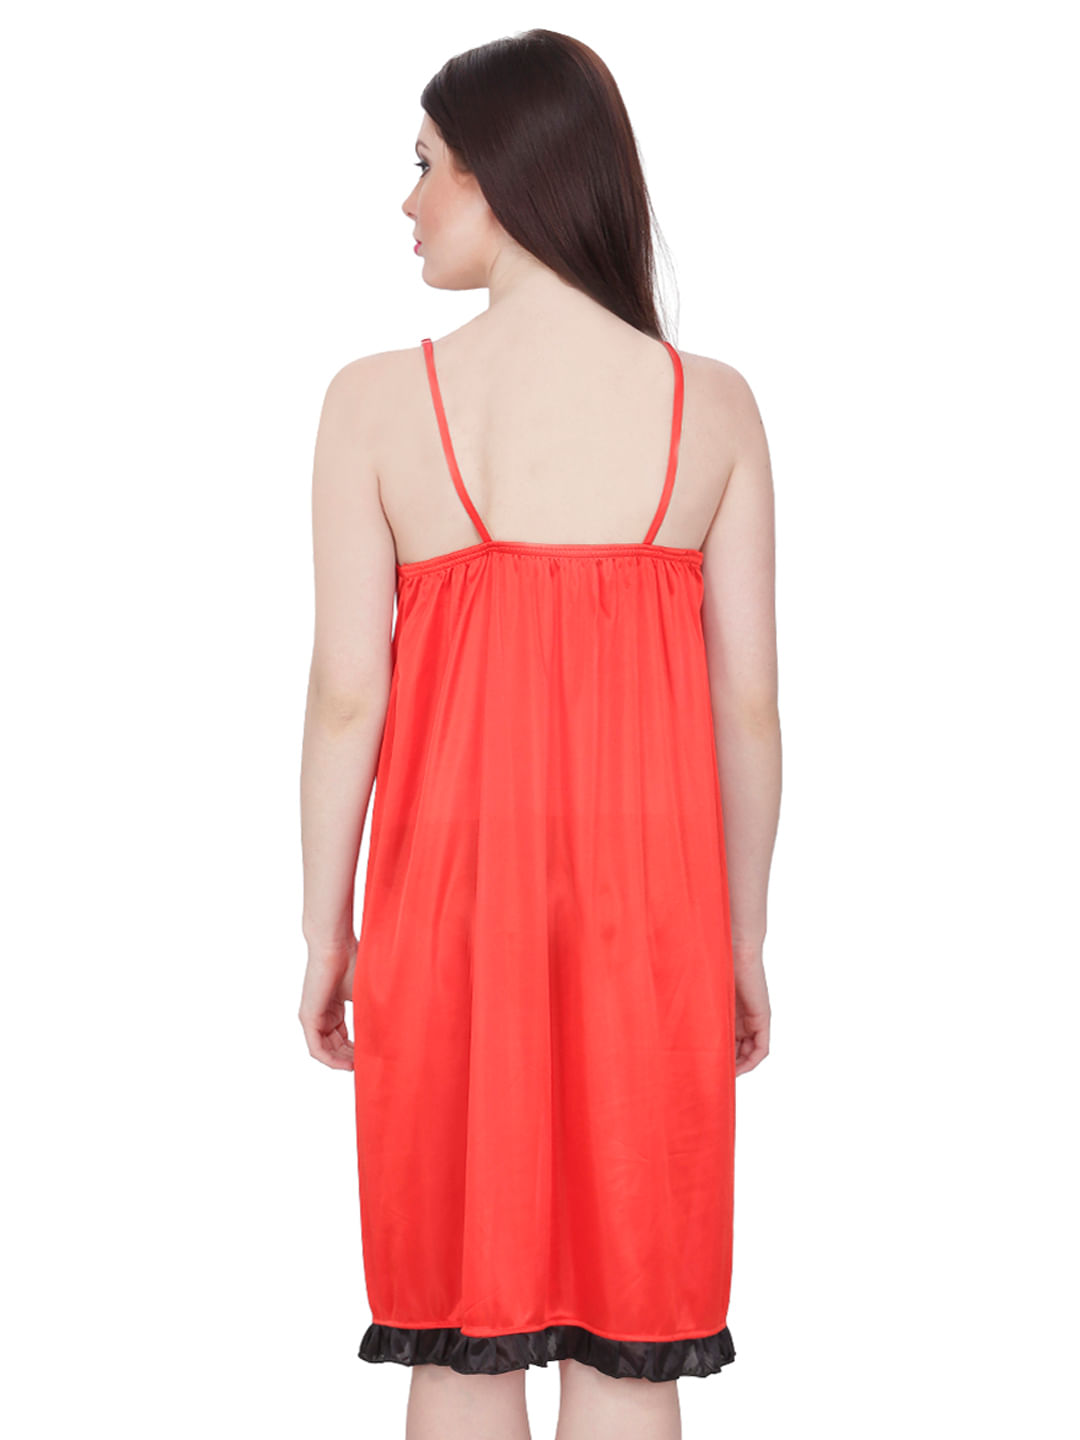 Satin Babydoll Dress (Red, Free Size)